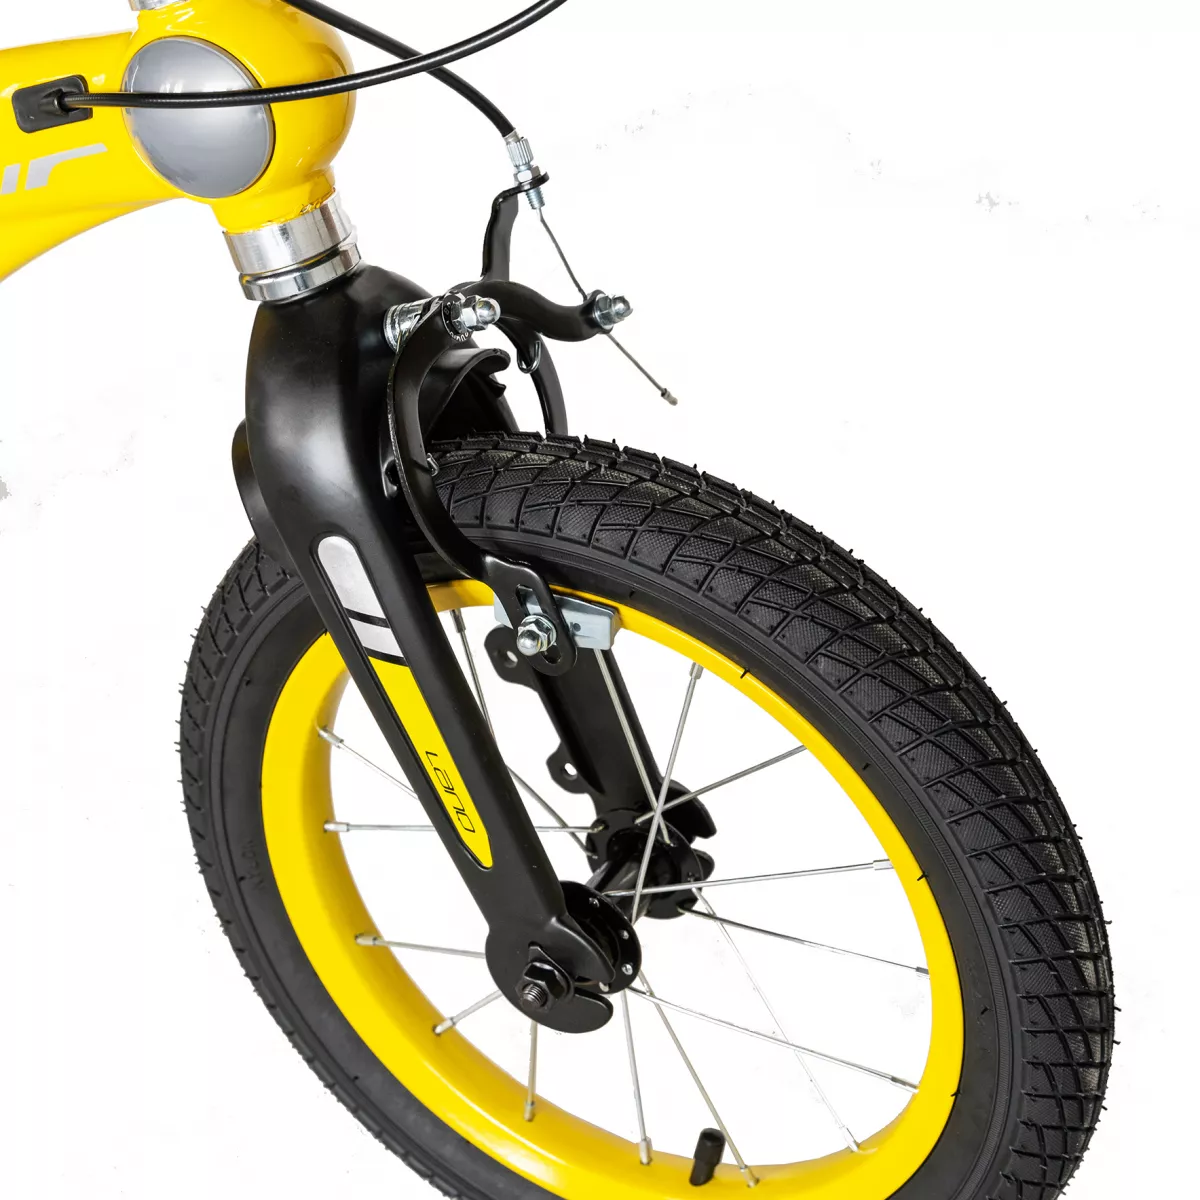 Bicicleta copii W1439D, roata 14", cadru aliaj magneziu, frana C-Brake, roti ajutatoare, 3-5 ani, galben/negru